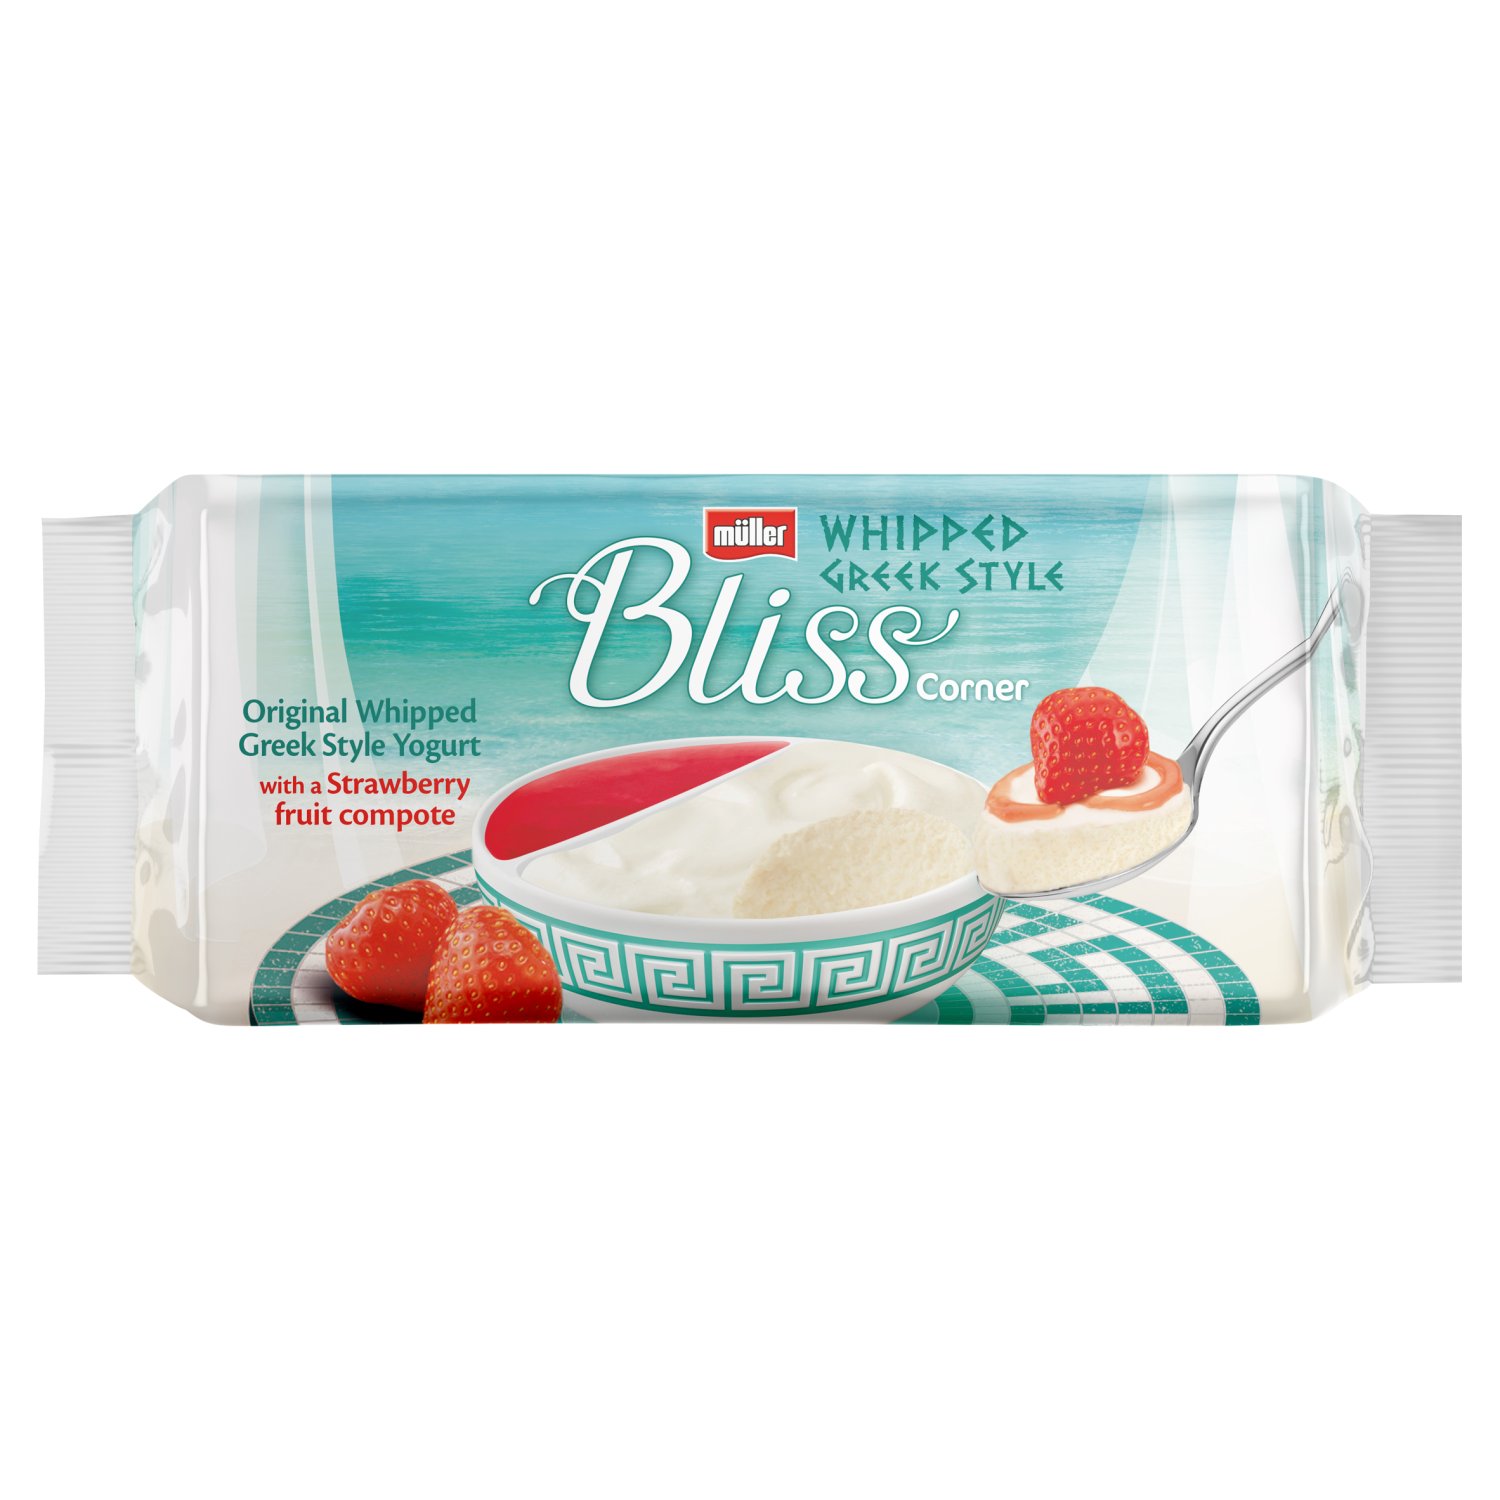 Muller Corner Bliss Yogurt with Strawberry 4 Pack (105 g)